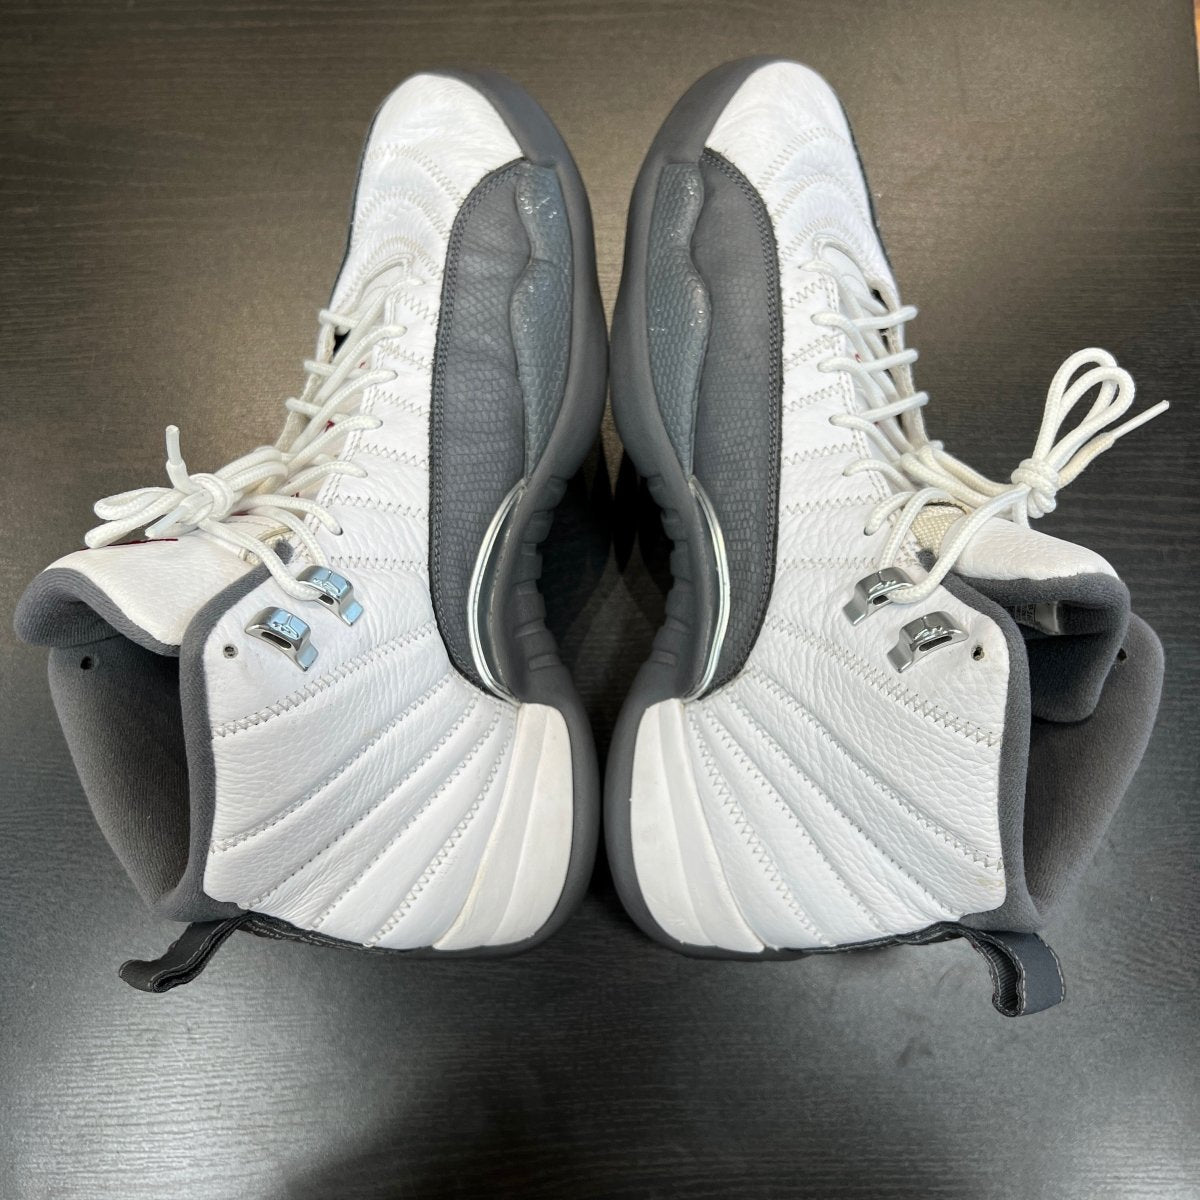 Jordan 12 Retro White Dark Grey - Gently Enjoyed (Used) Men 11 - sneaker - Mid Sneaker - Jordan - Jawns on Fire